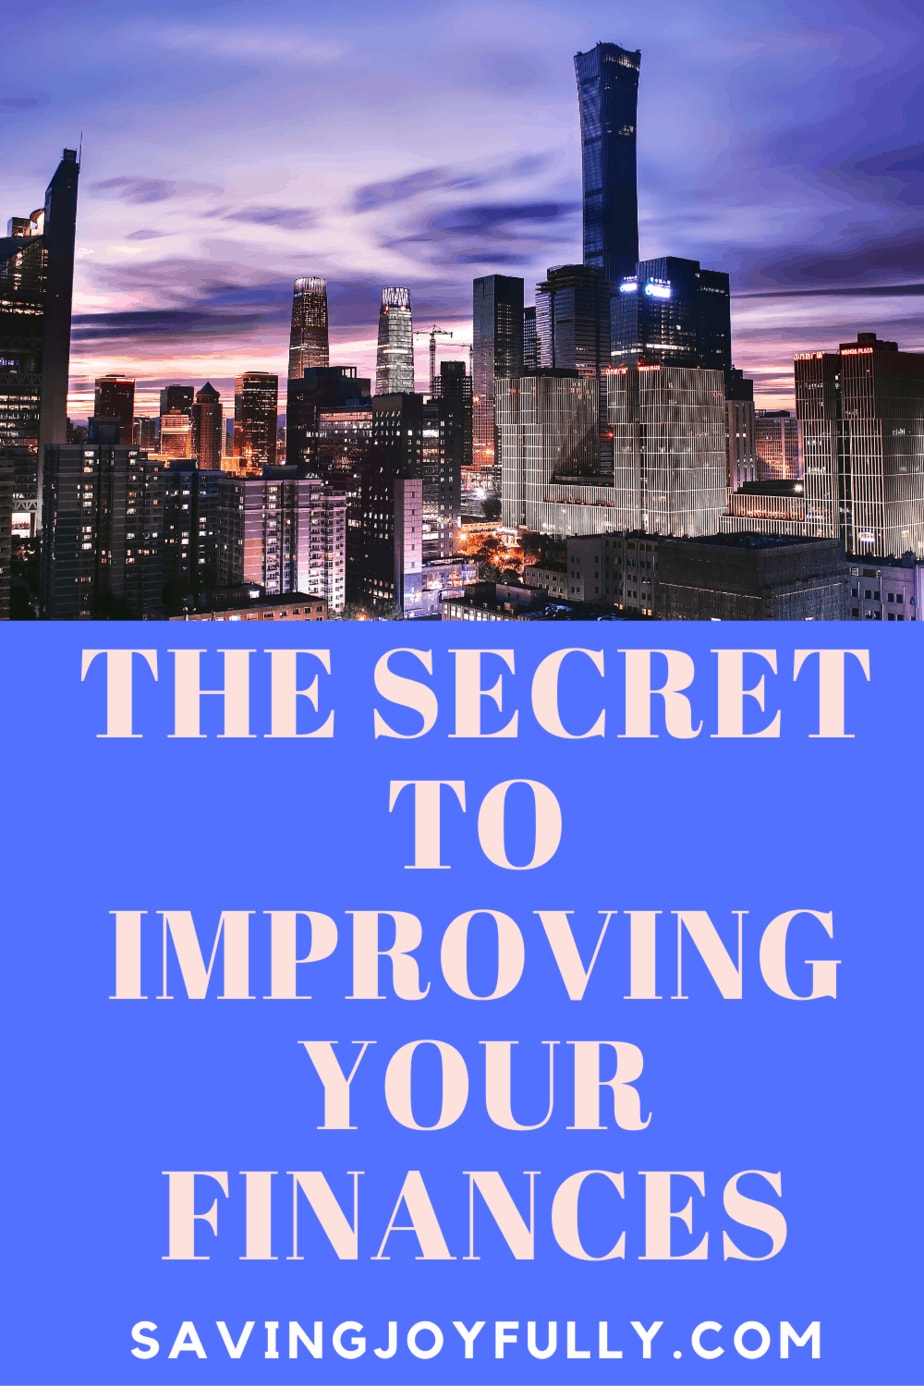 THE SECRET TO IMPROVING YOUR FINANCES